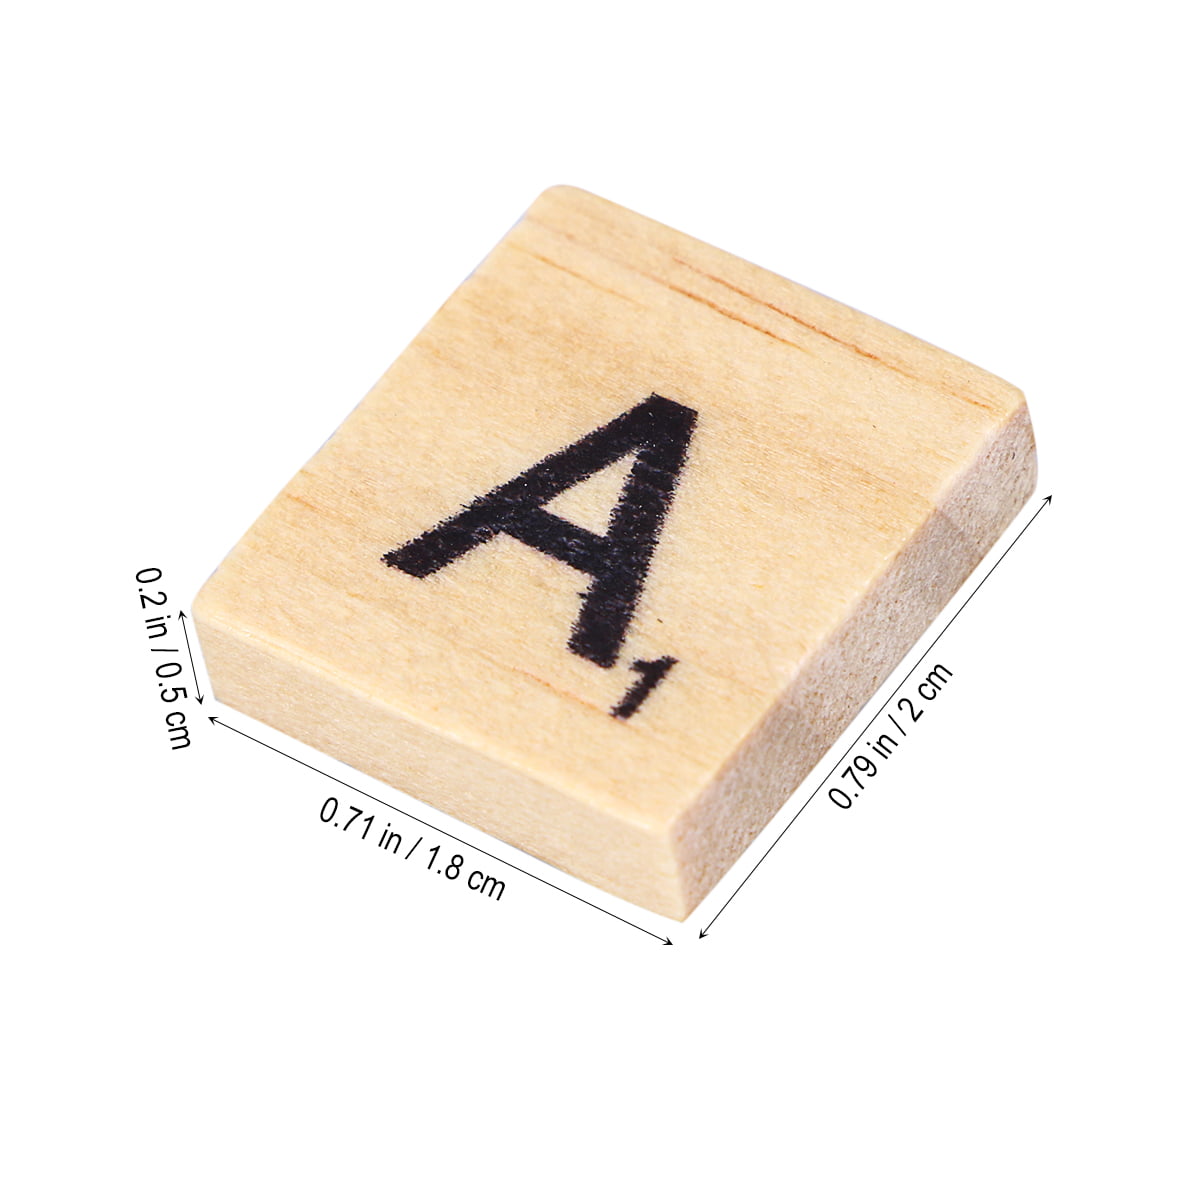 8 x Scrabble Tiles letter O wooden tile Weddings Craft scrap booking 